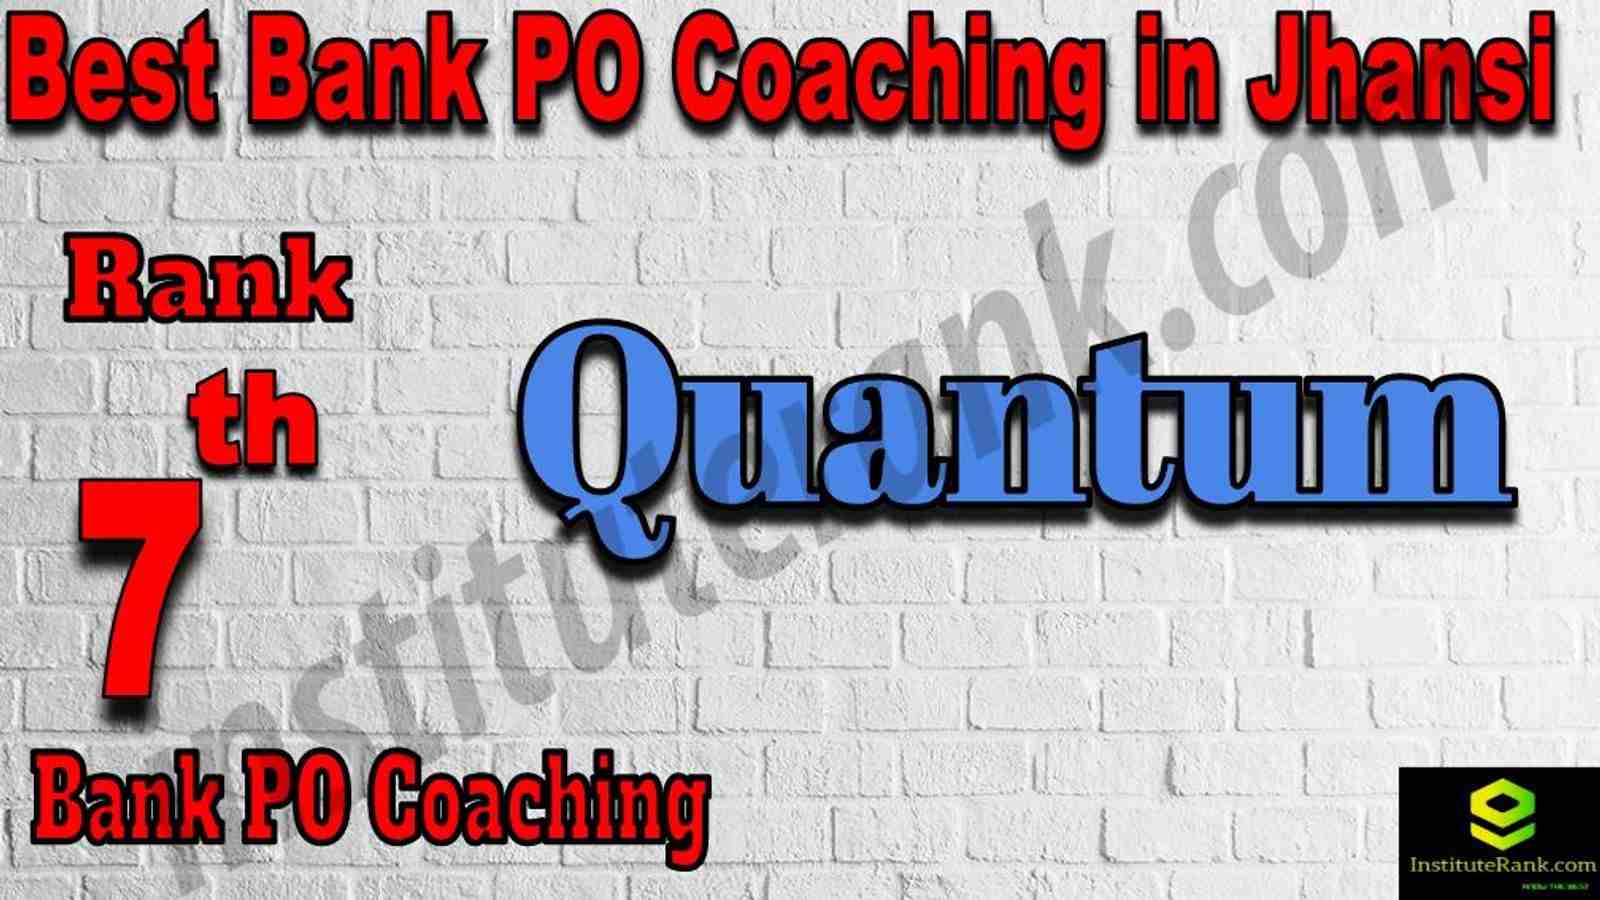 7th Best Bank PO Coaching in Jhansi